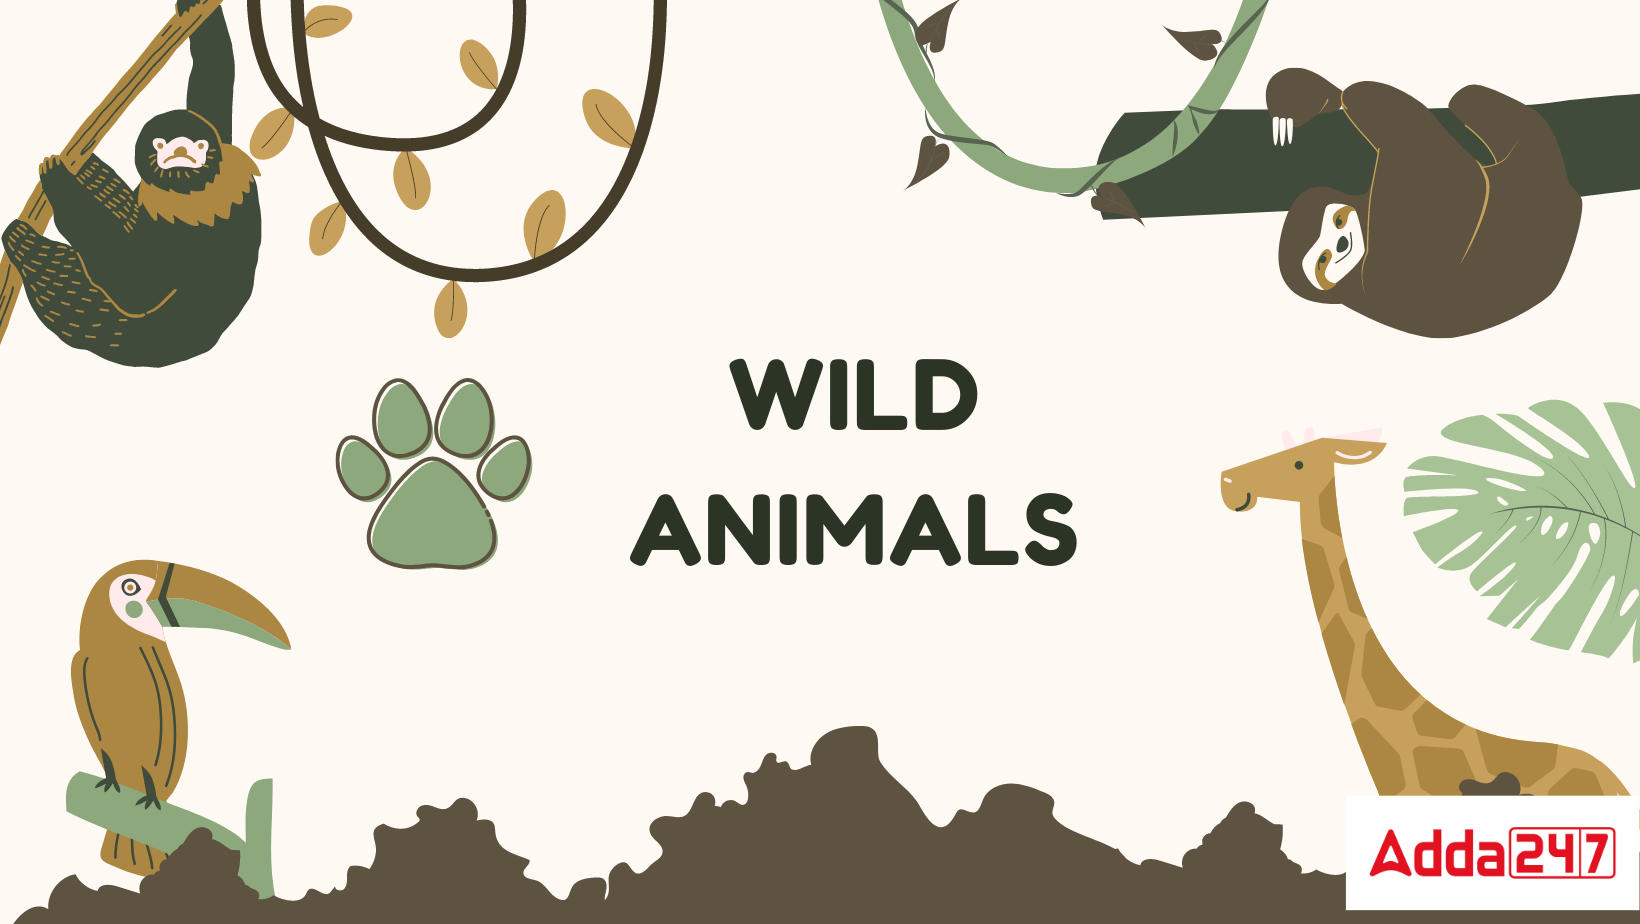 100 Wild Animals Name in English and Hindi